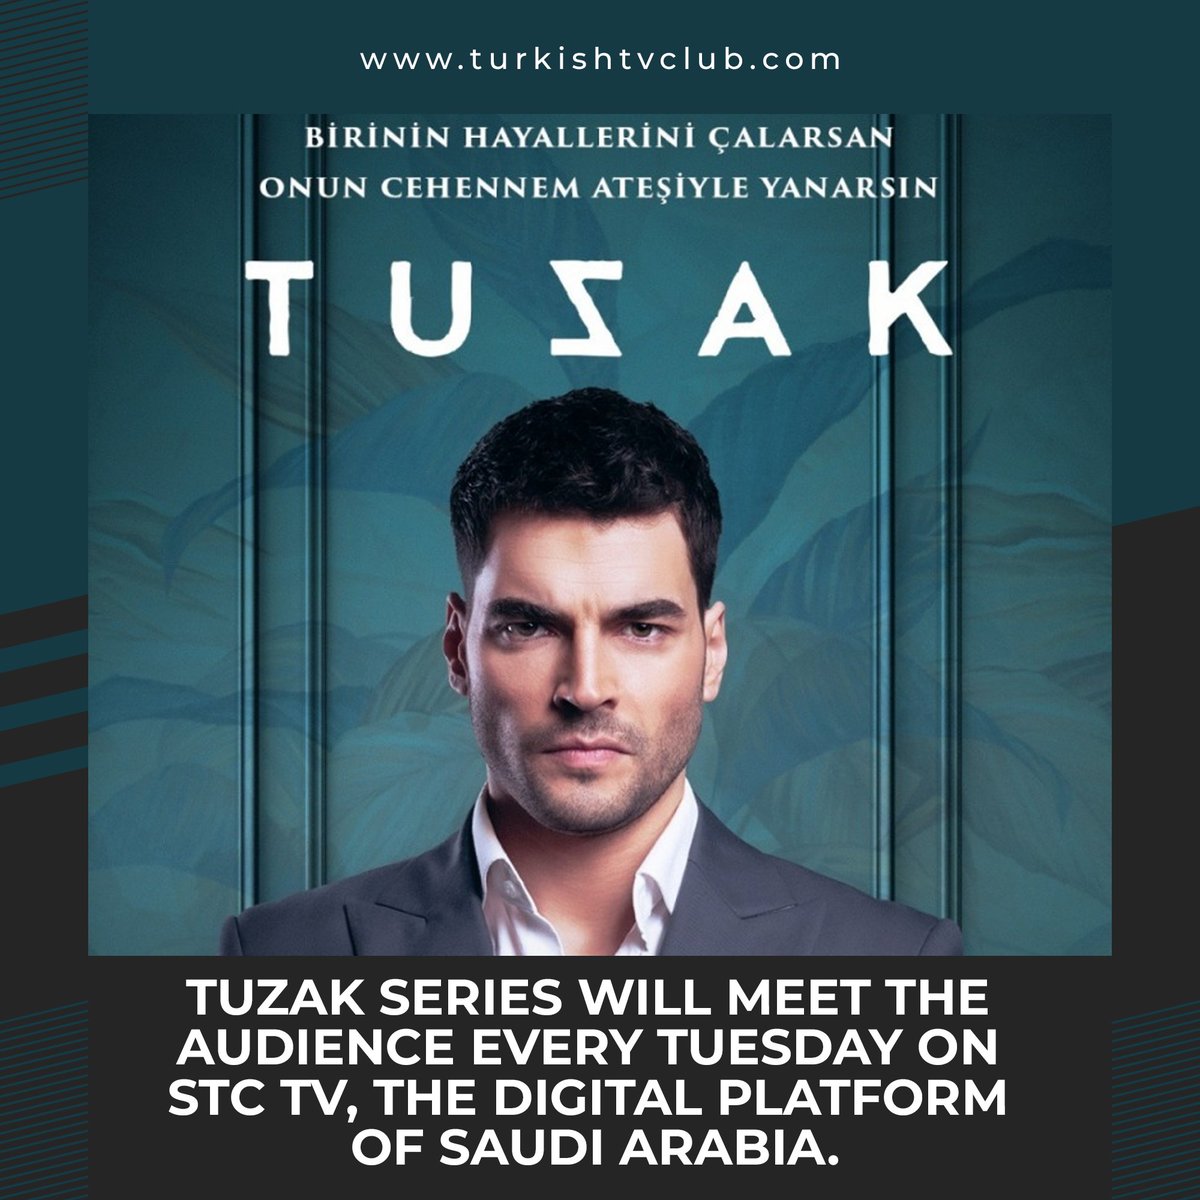 Tuzak series will meet the audience every Tuesday on STC TV, the digital platform of Saudi Arabia.

#Tuzak #AkınAkınözü #BensuSoral #TalatBulut #RızaKocaoğlu #AkinAkinozu #Hercai